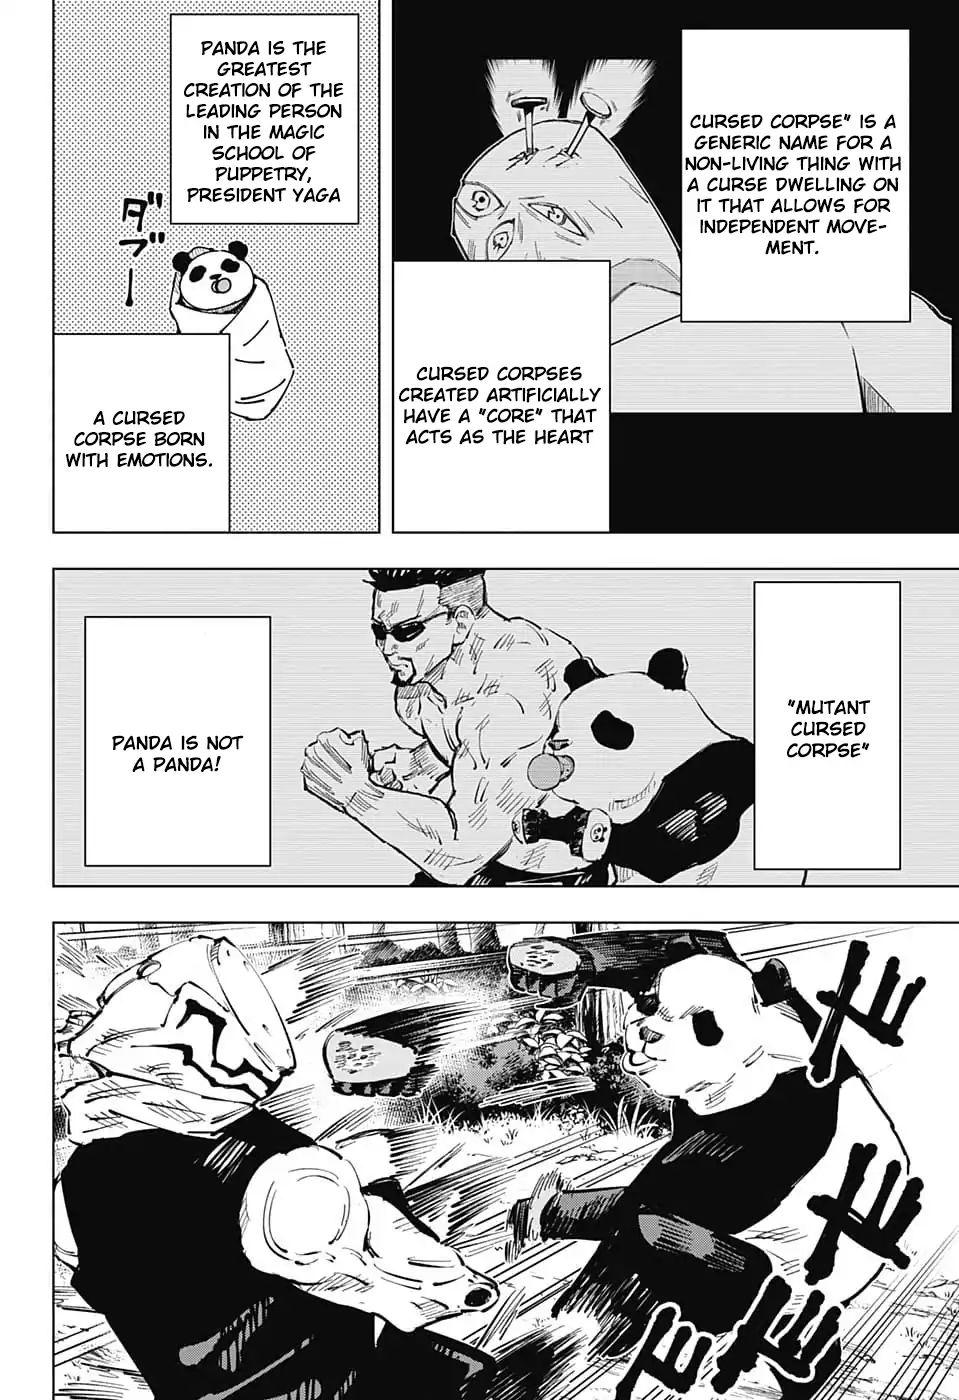 Jujutsu Kaisen Chapter 38: Exchange Festival With The Kyoto School - Team Battle 5 page 10 - Mangakakalot